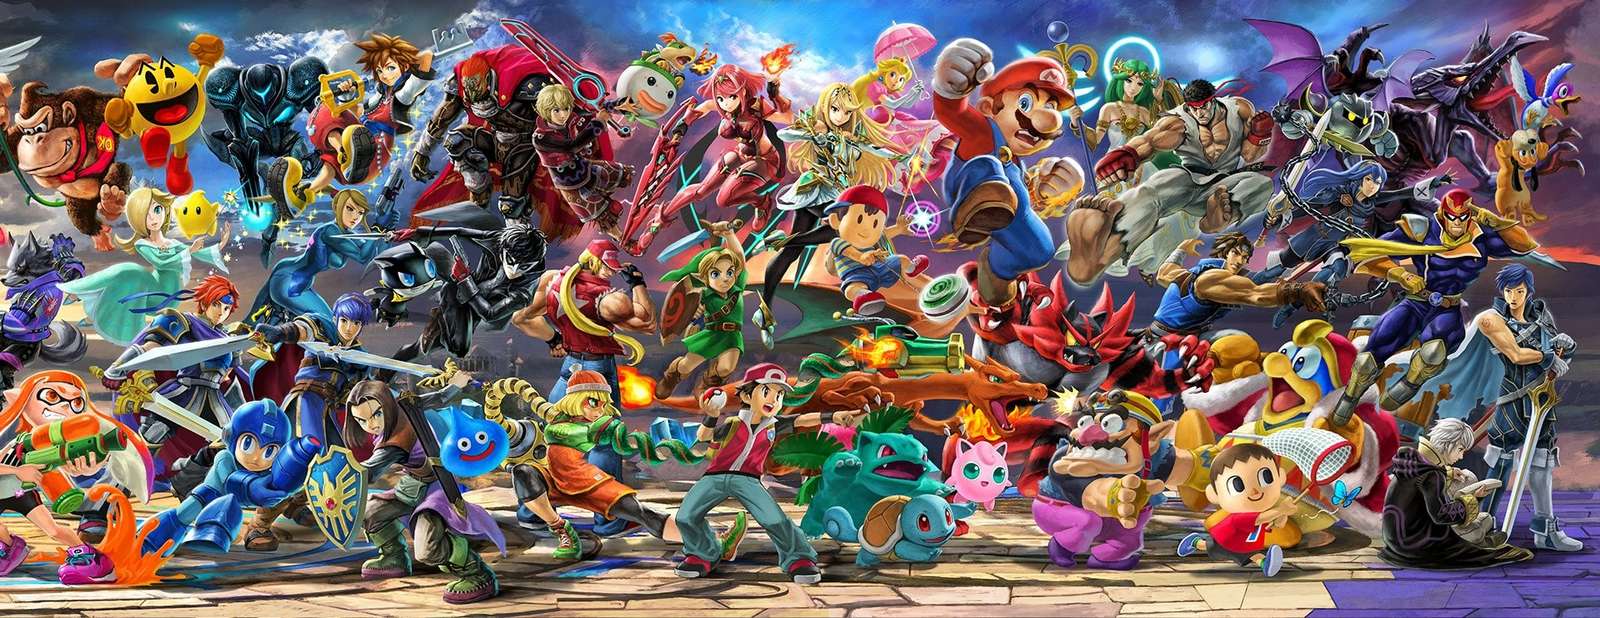 Mural Super Smash Bros Ultimate, po prawej puzzle online